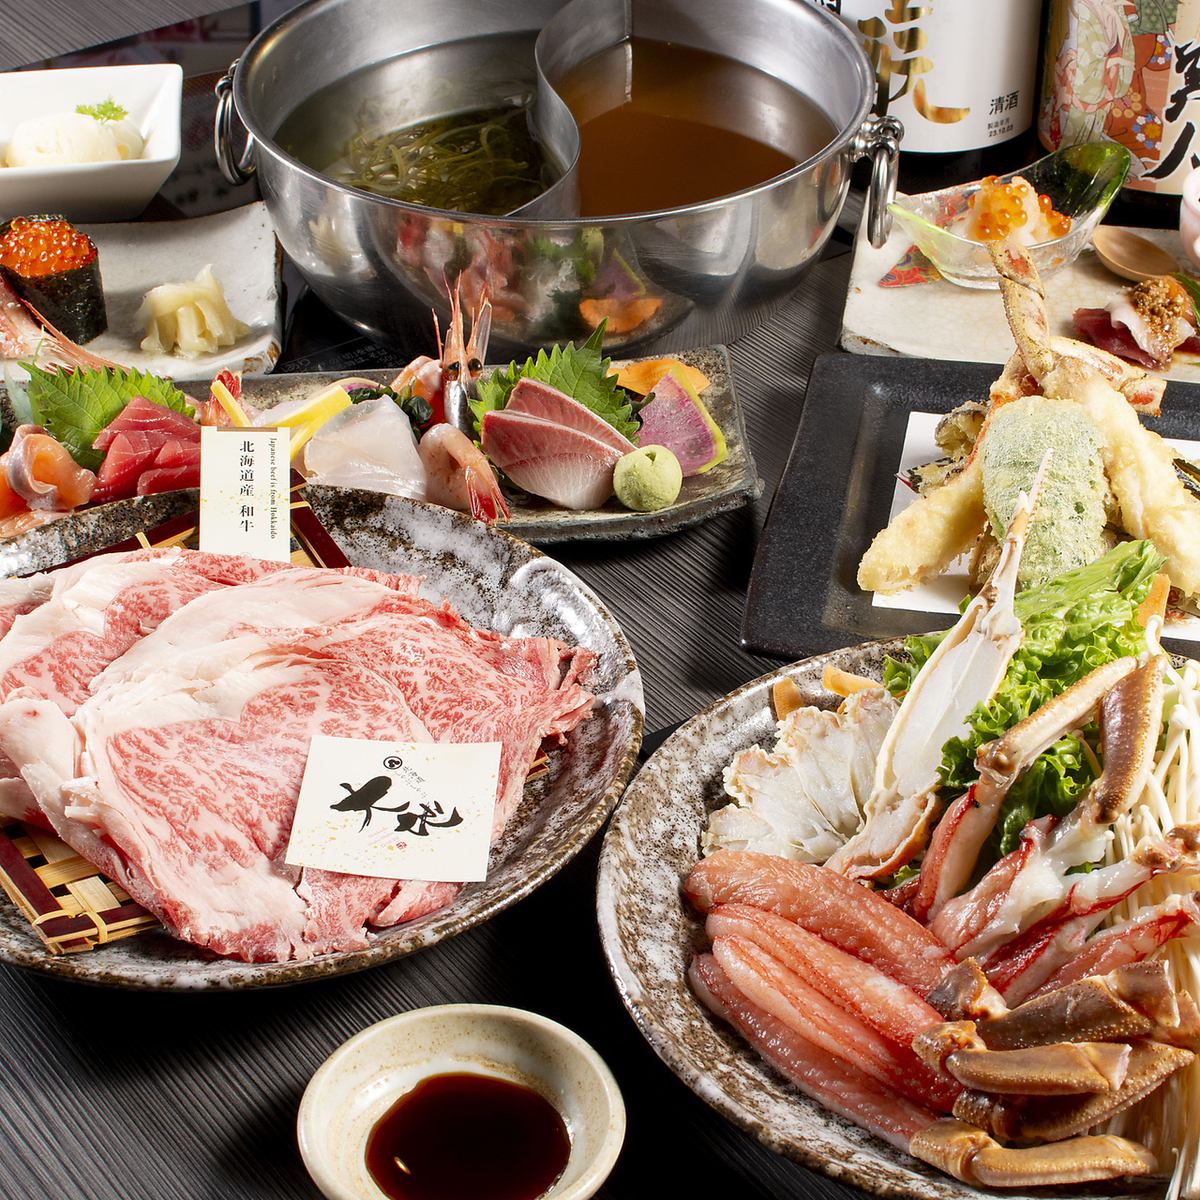 All-you-can-eat carefully selected lamb and Hokkaido Susukino Akane pork! Hokkaido shabu-shabu restaurant